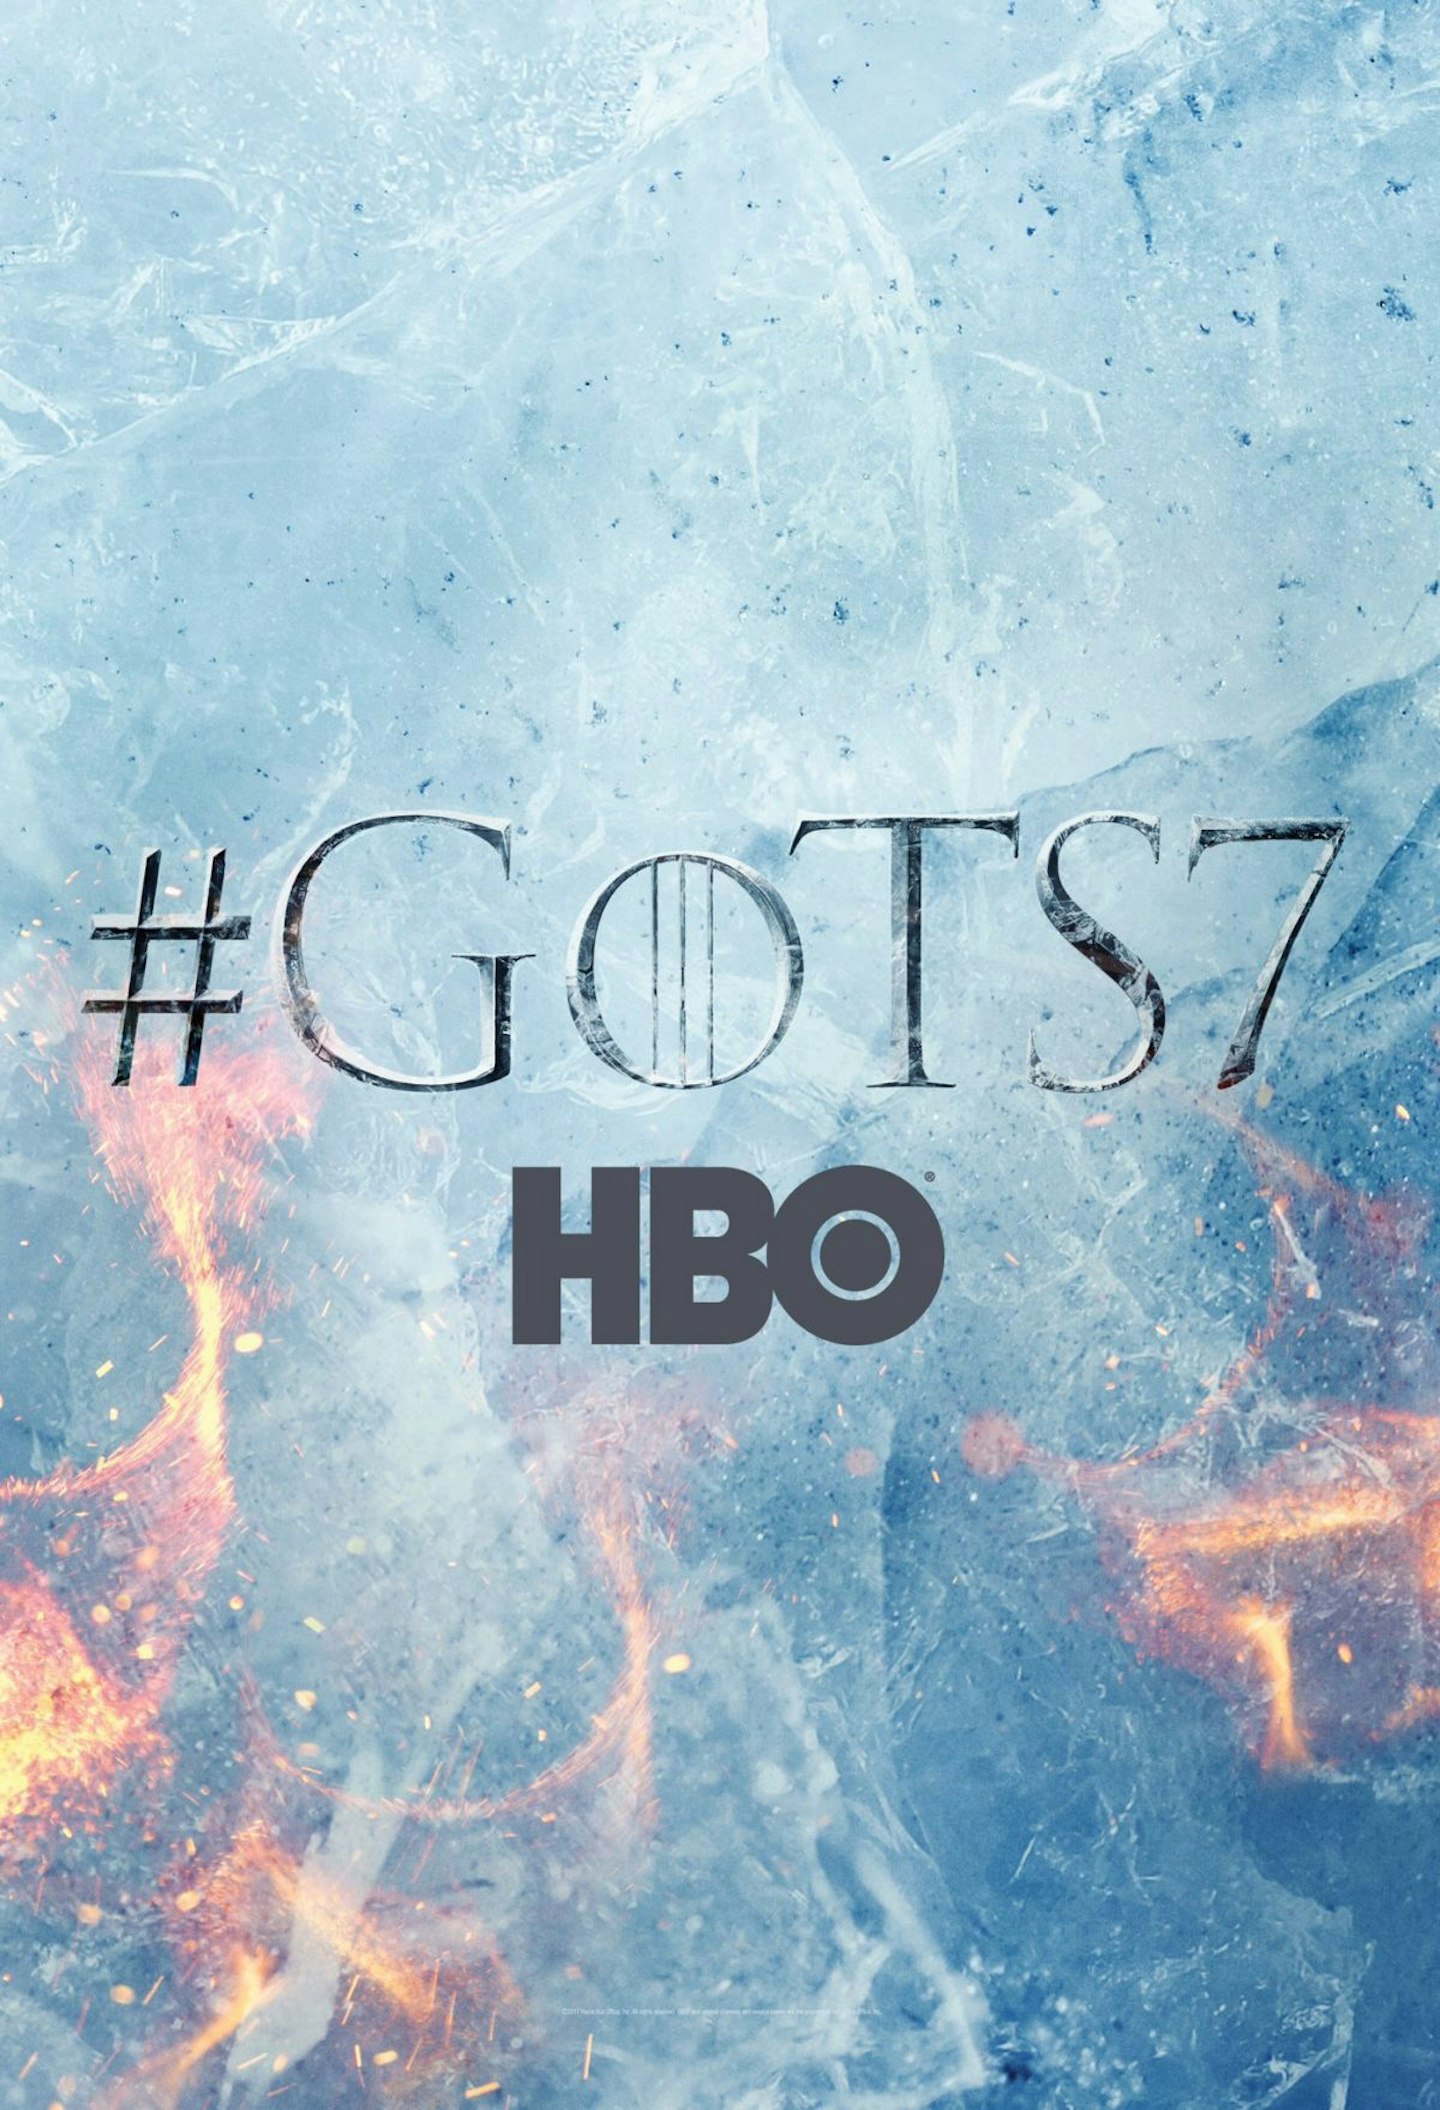 Game Of Thrones Season 7 Teaser Poster